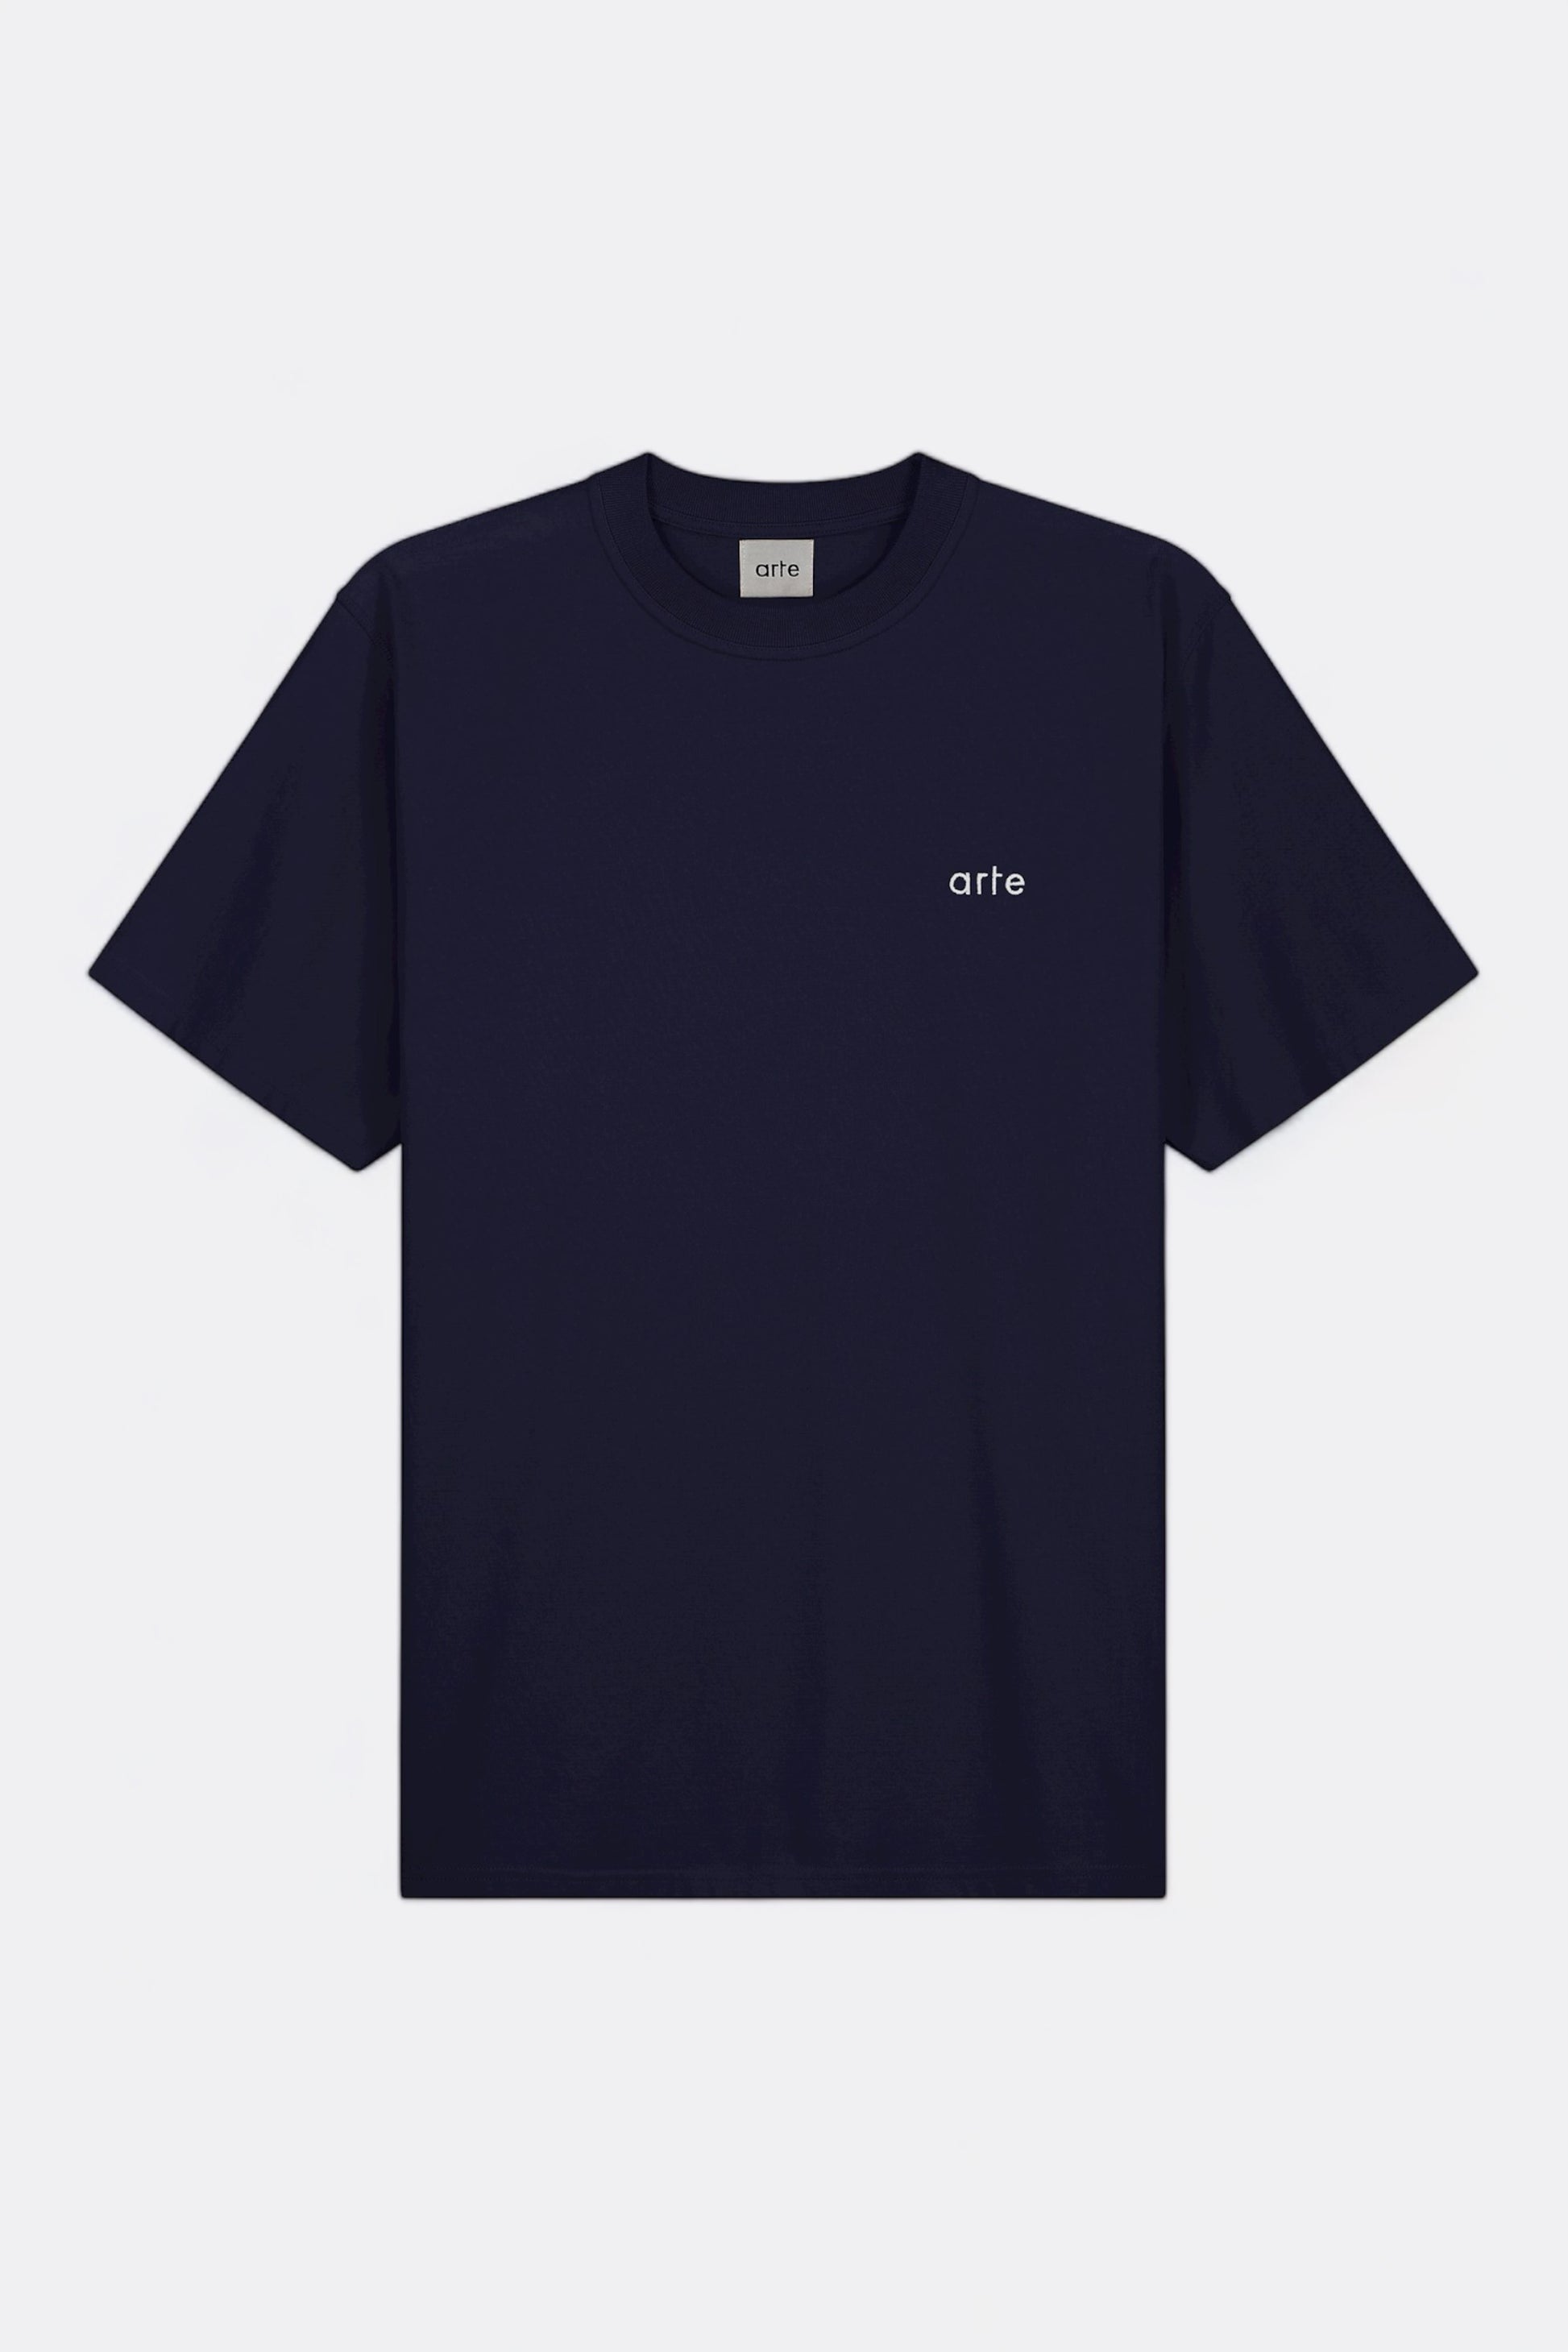 Arte - Teo Back Team T-shirt (Navy)